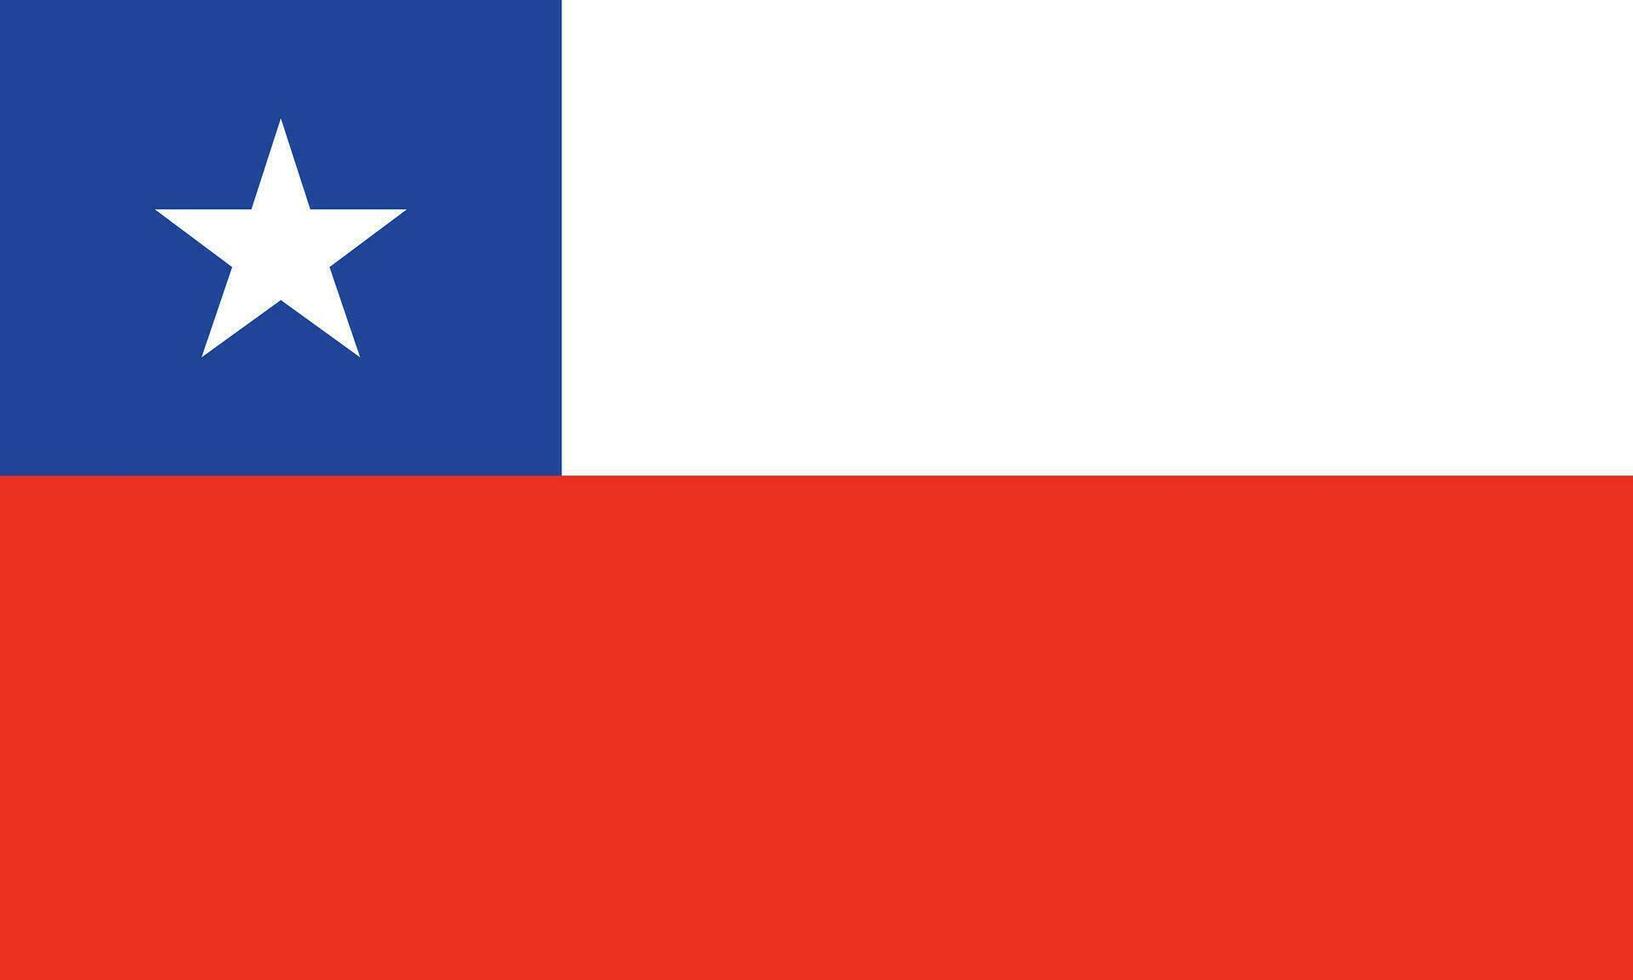 vlak illustratie van Chili vlag. Chili vlag ontwerp. vector